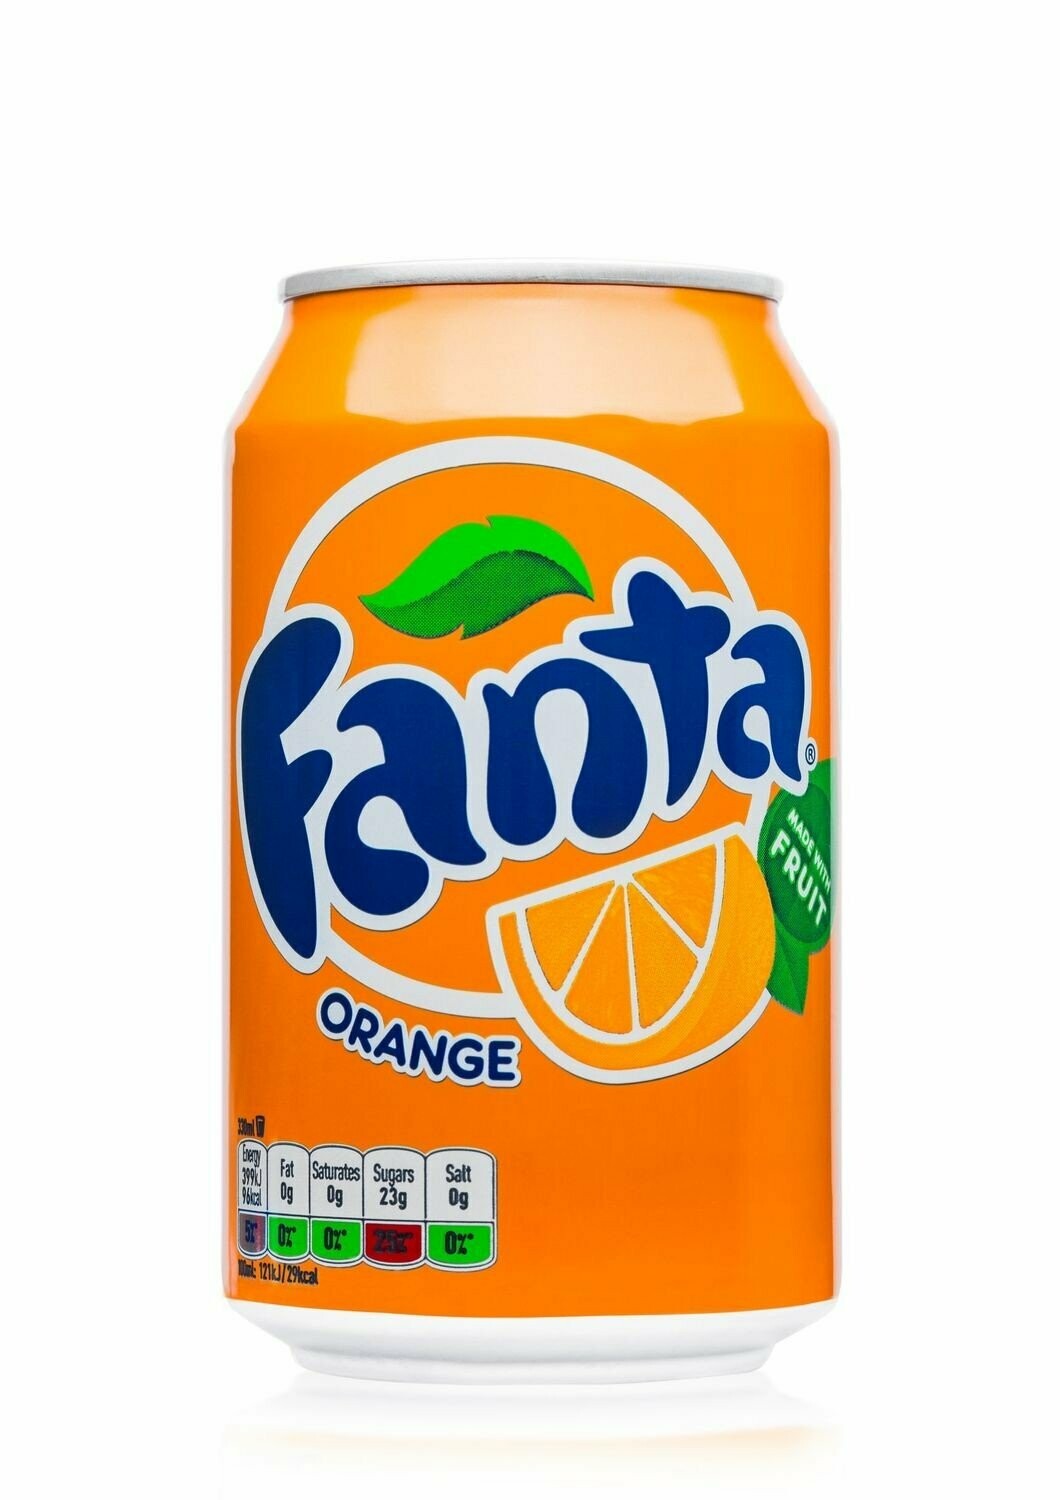 Fanta Orange boîte 33 cl (la canette)